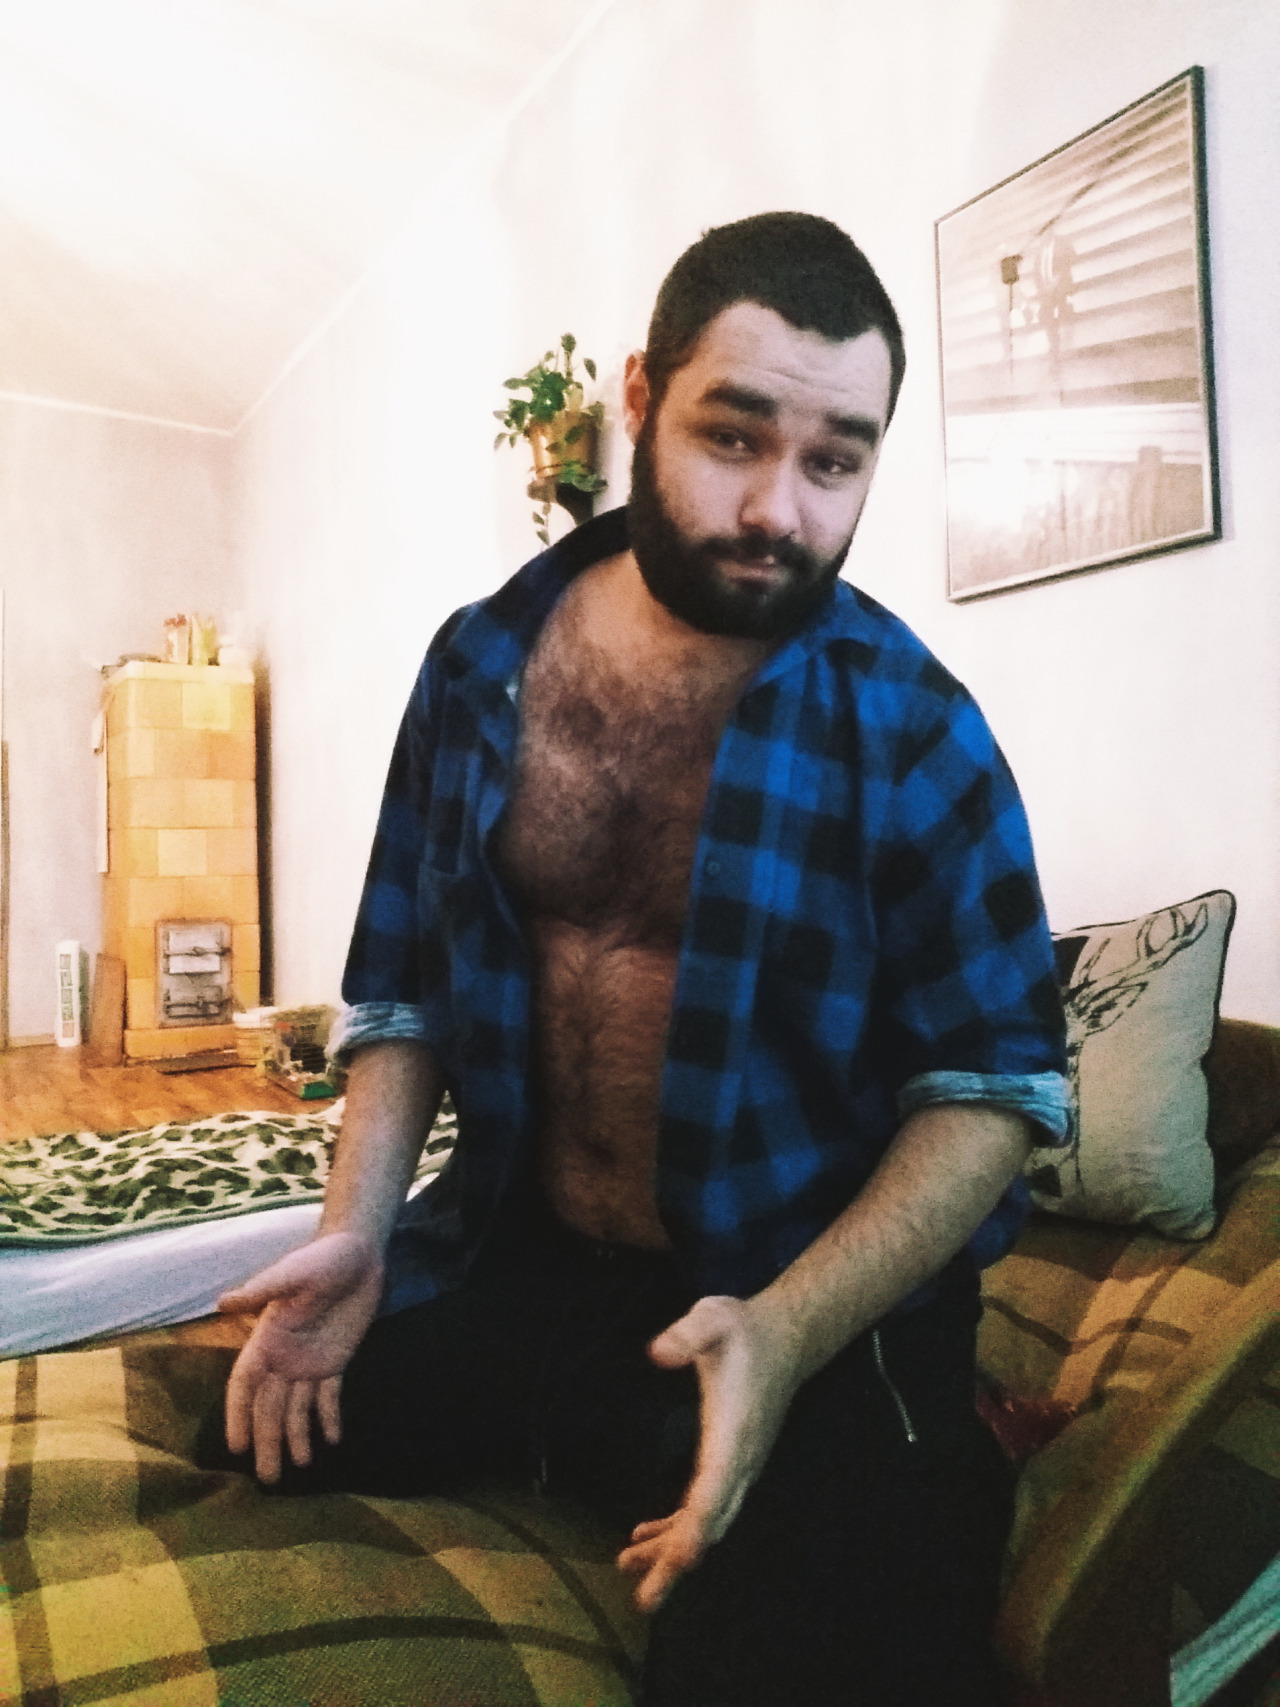 me-and-my-beard:Im a slut for flannels cha cha cha